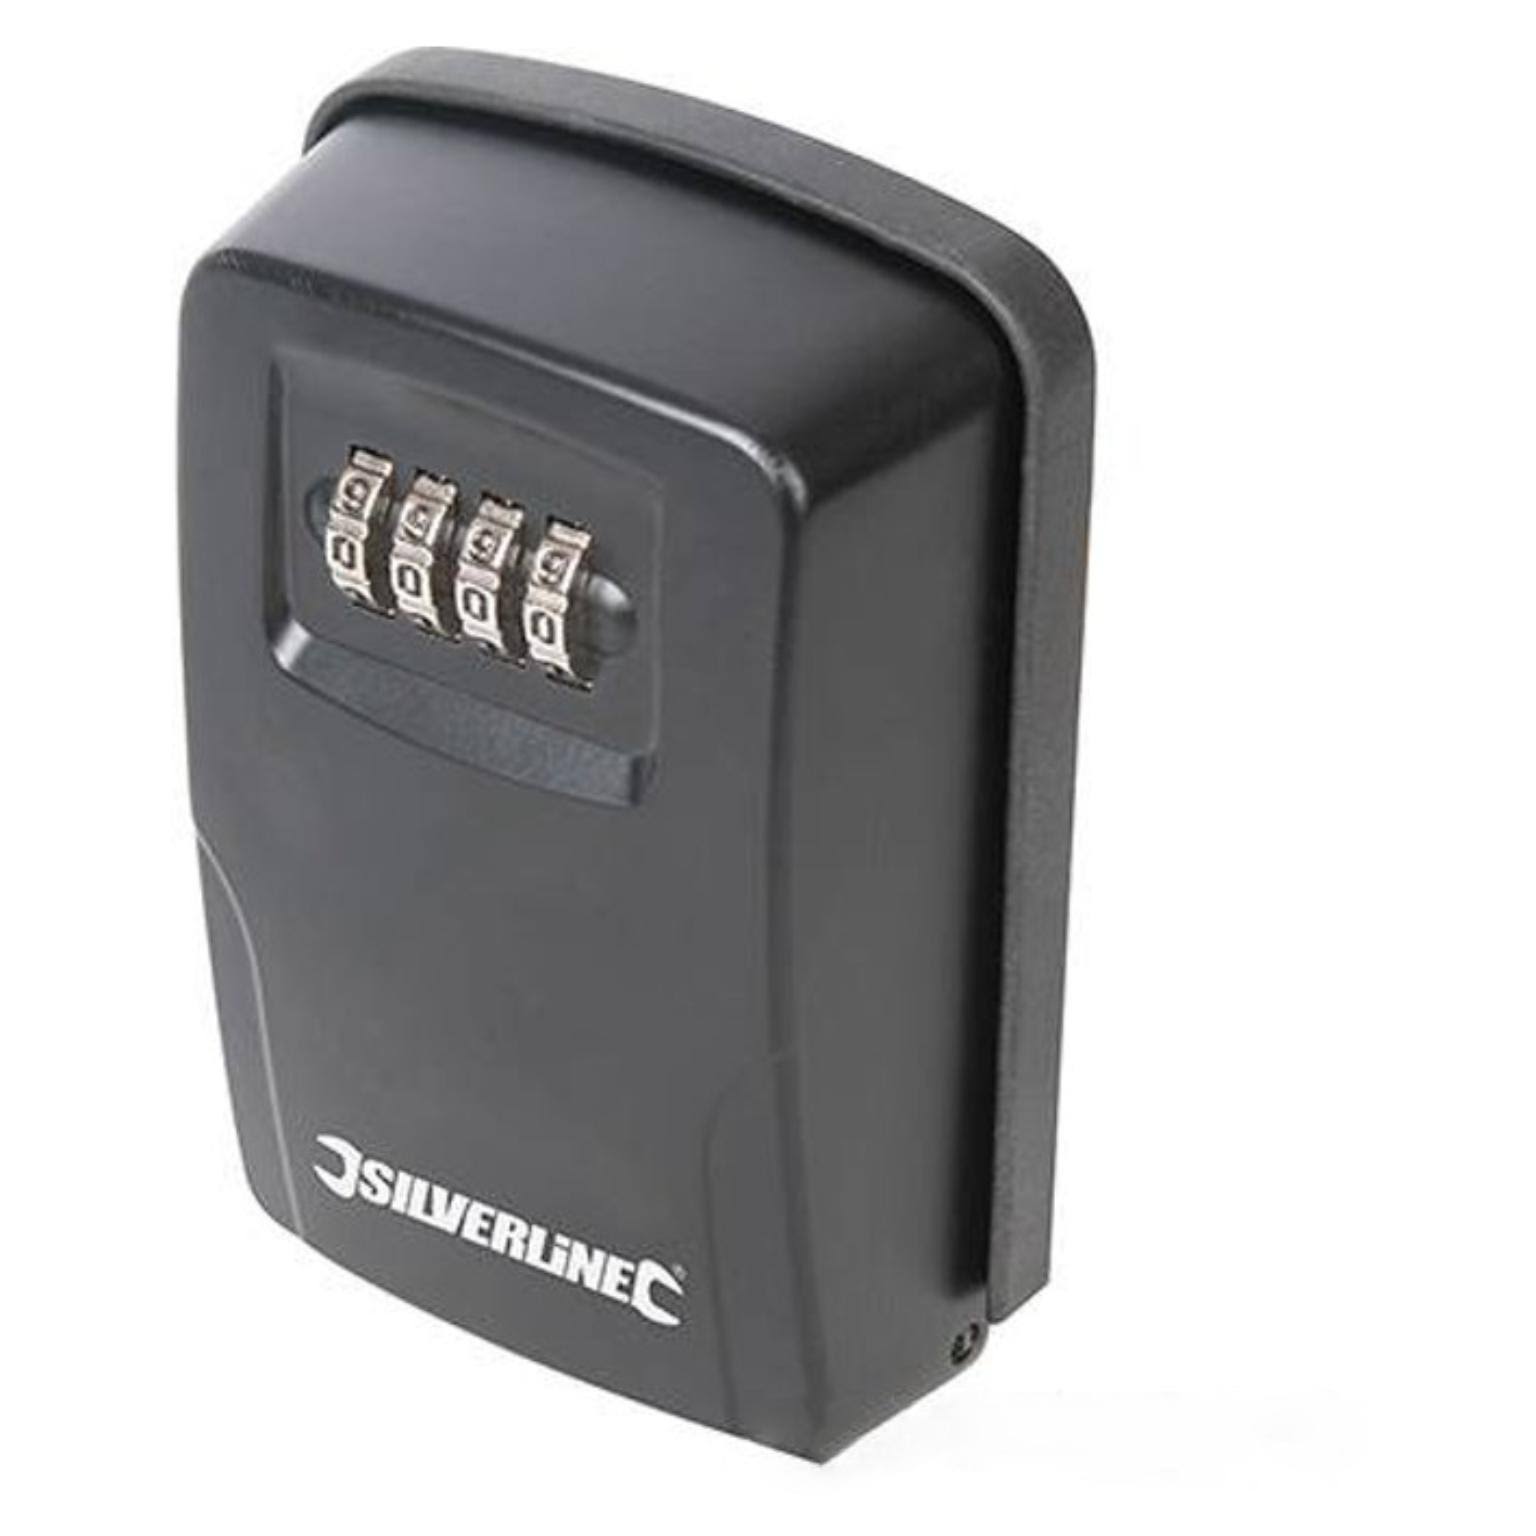 Silverline - Key Safe Wall-Mounted - 121 x 83 x 40mm 309218